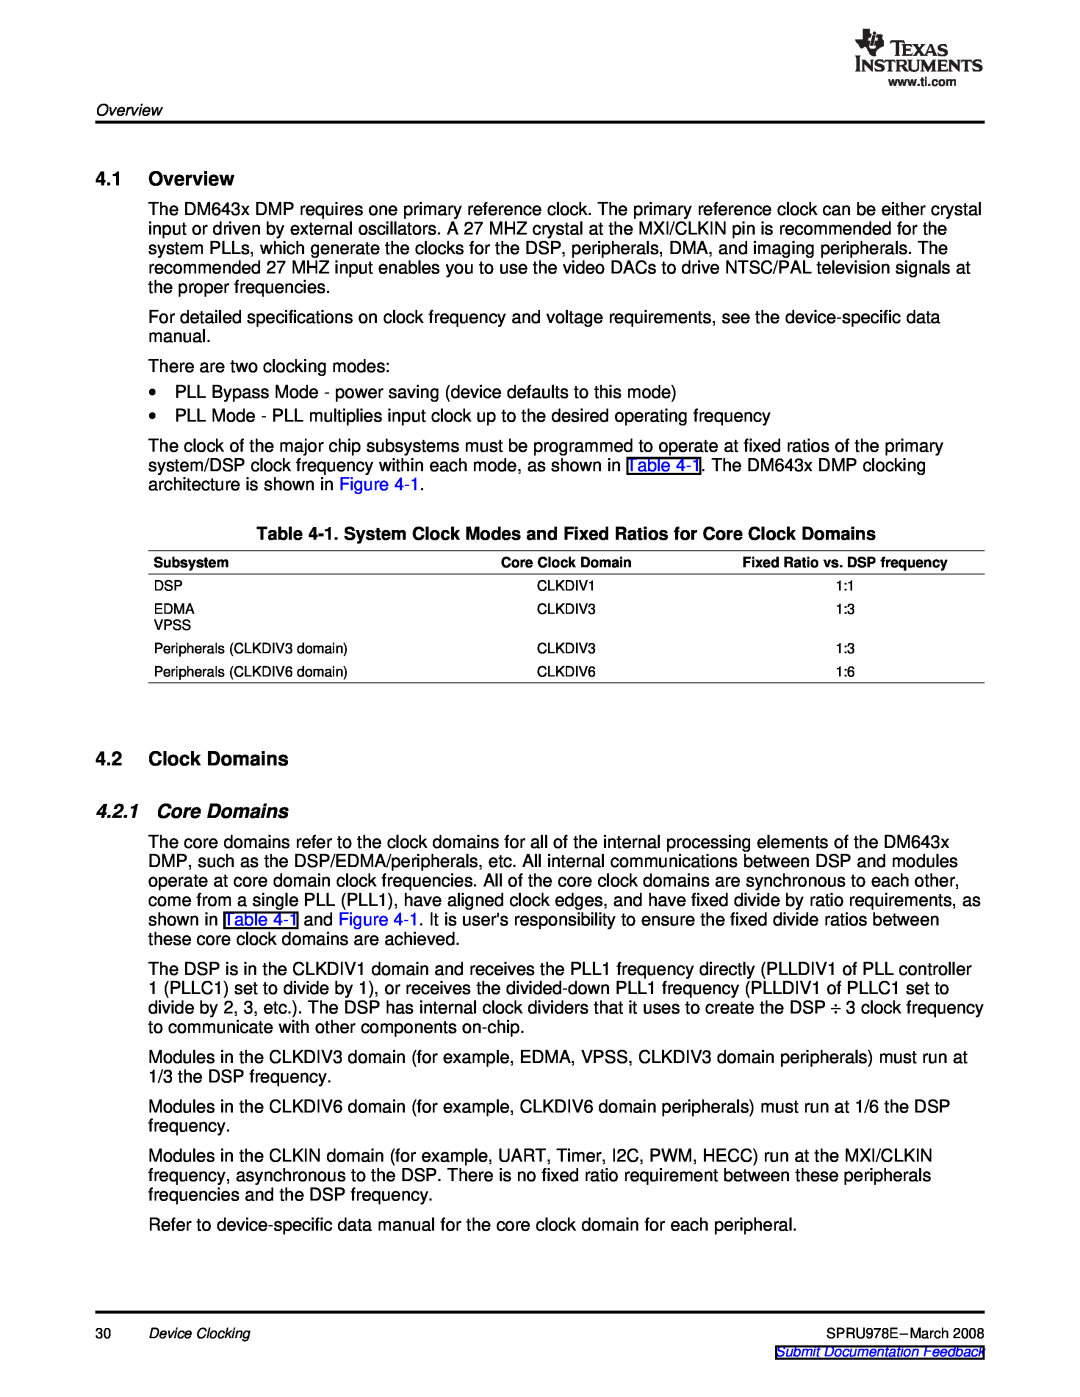 Texas Instruments TMS320DM643x manual Overview, Clock Domains, Core Domains 